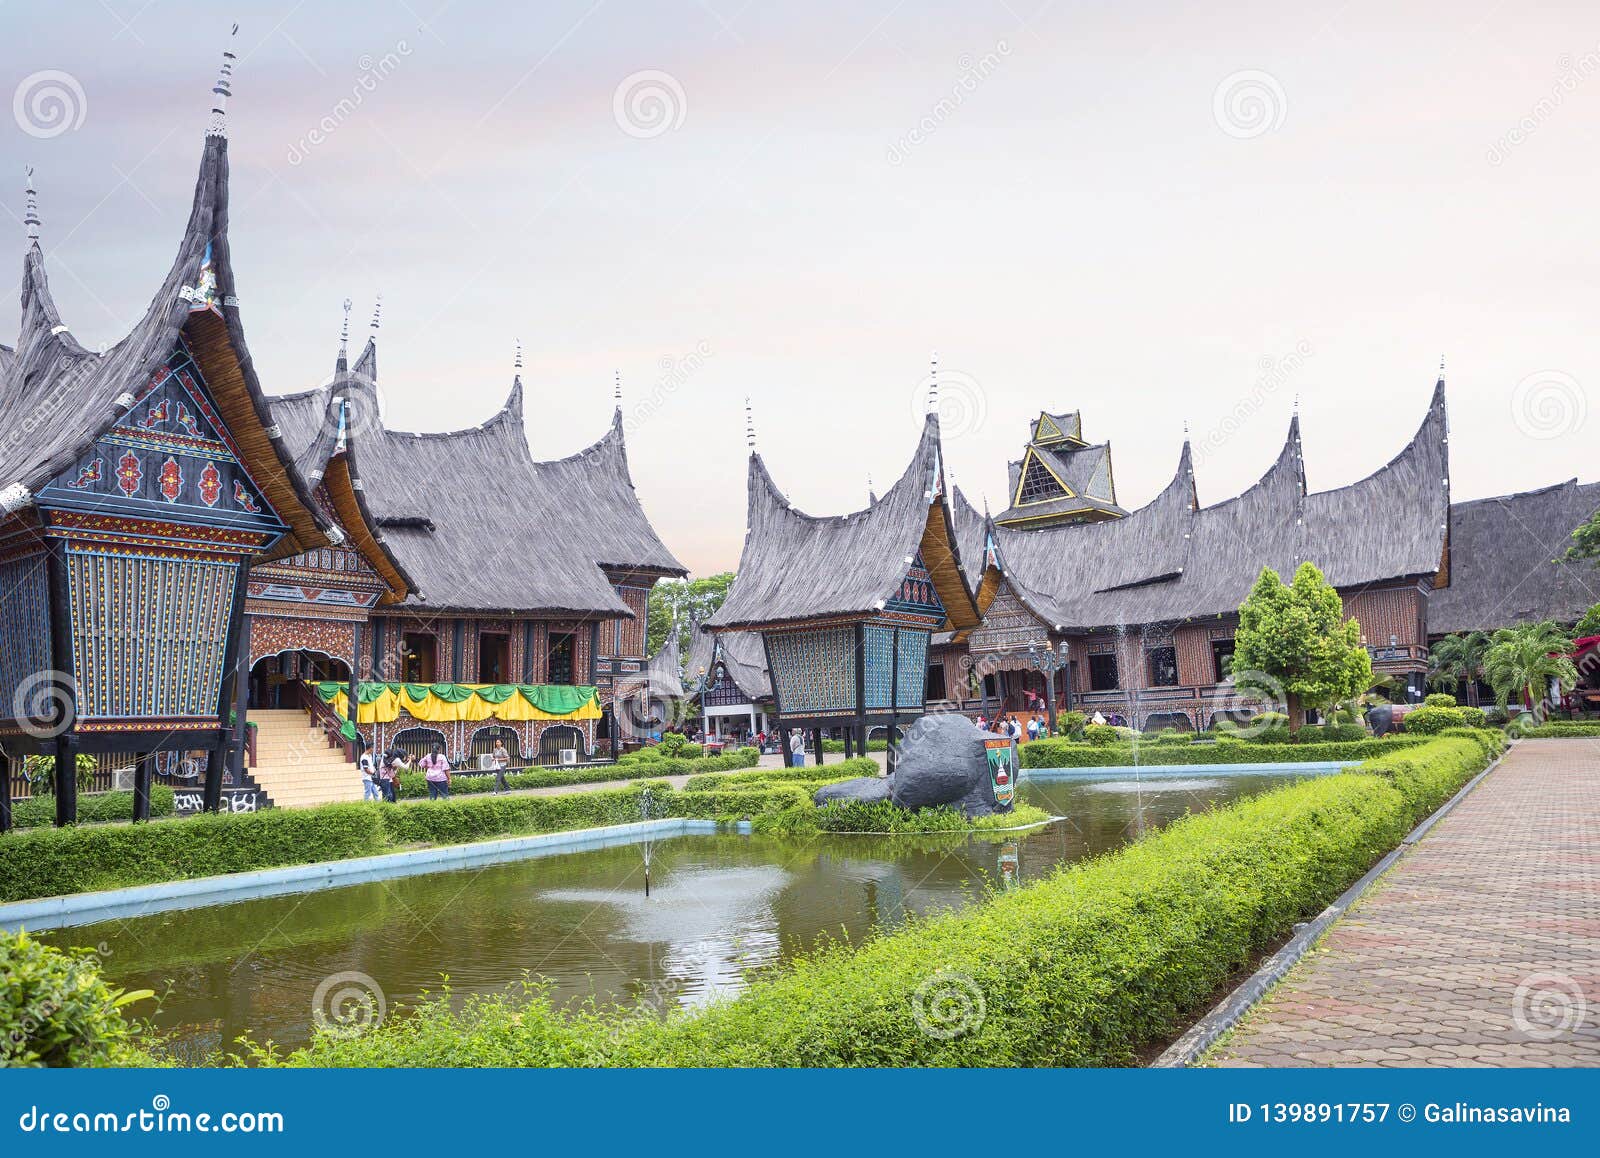 Jakarta Indonesia Taman Mini Park Beautiful Indonesia In Miniature Editorial Photography Image Of Landmark Decor 139891757